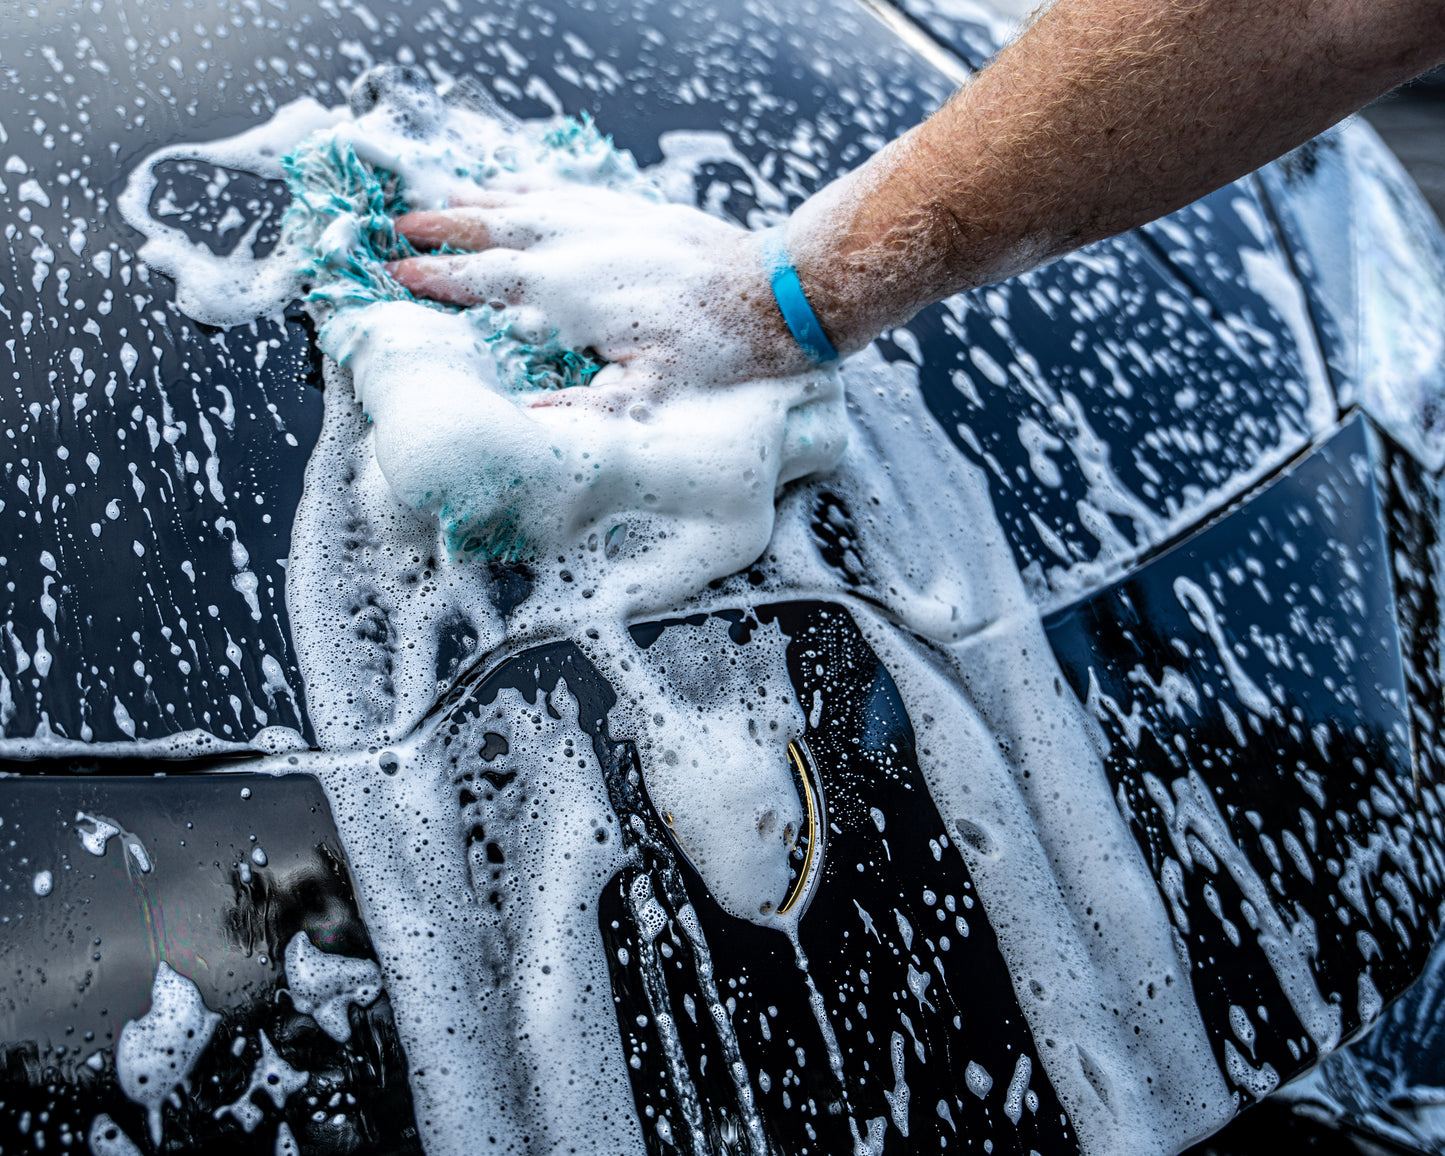 Fibreking supreme car wash shampoo bucket